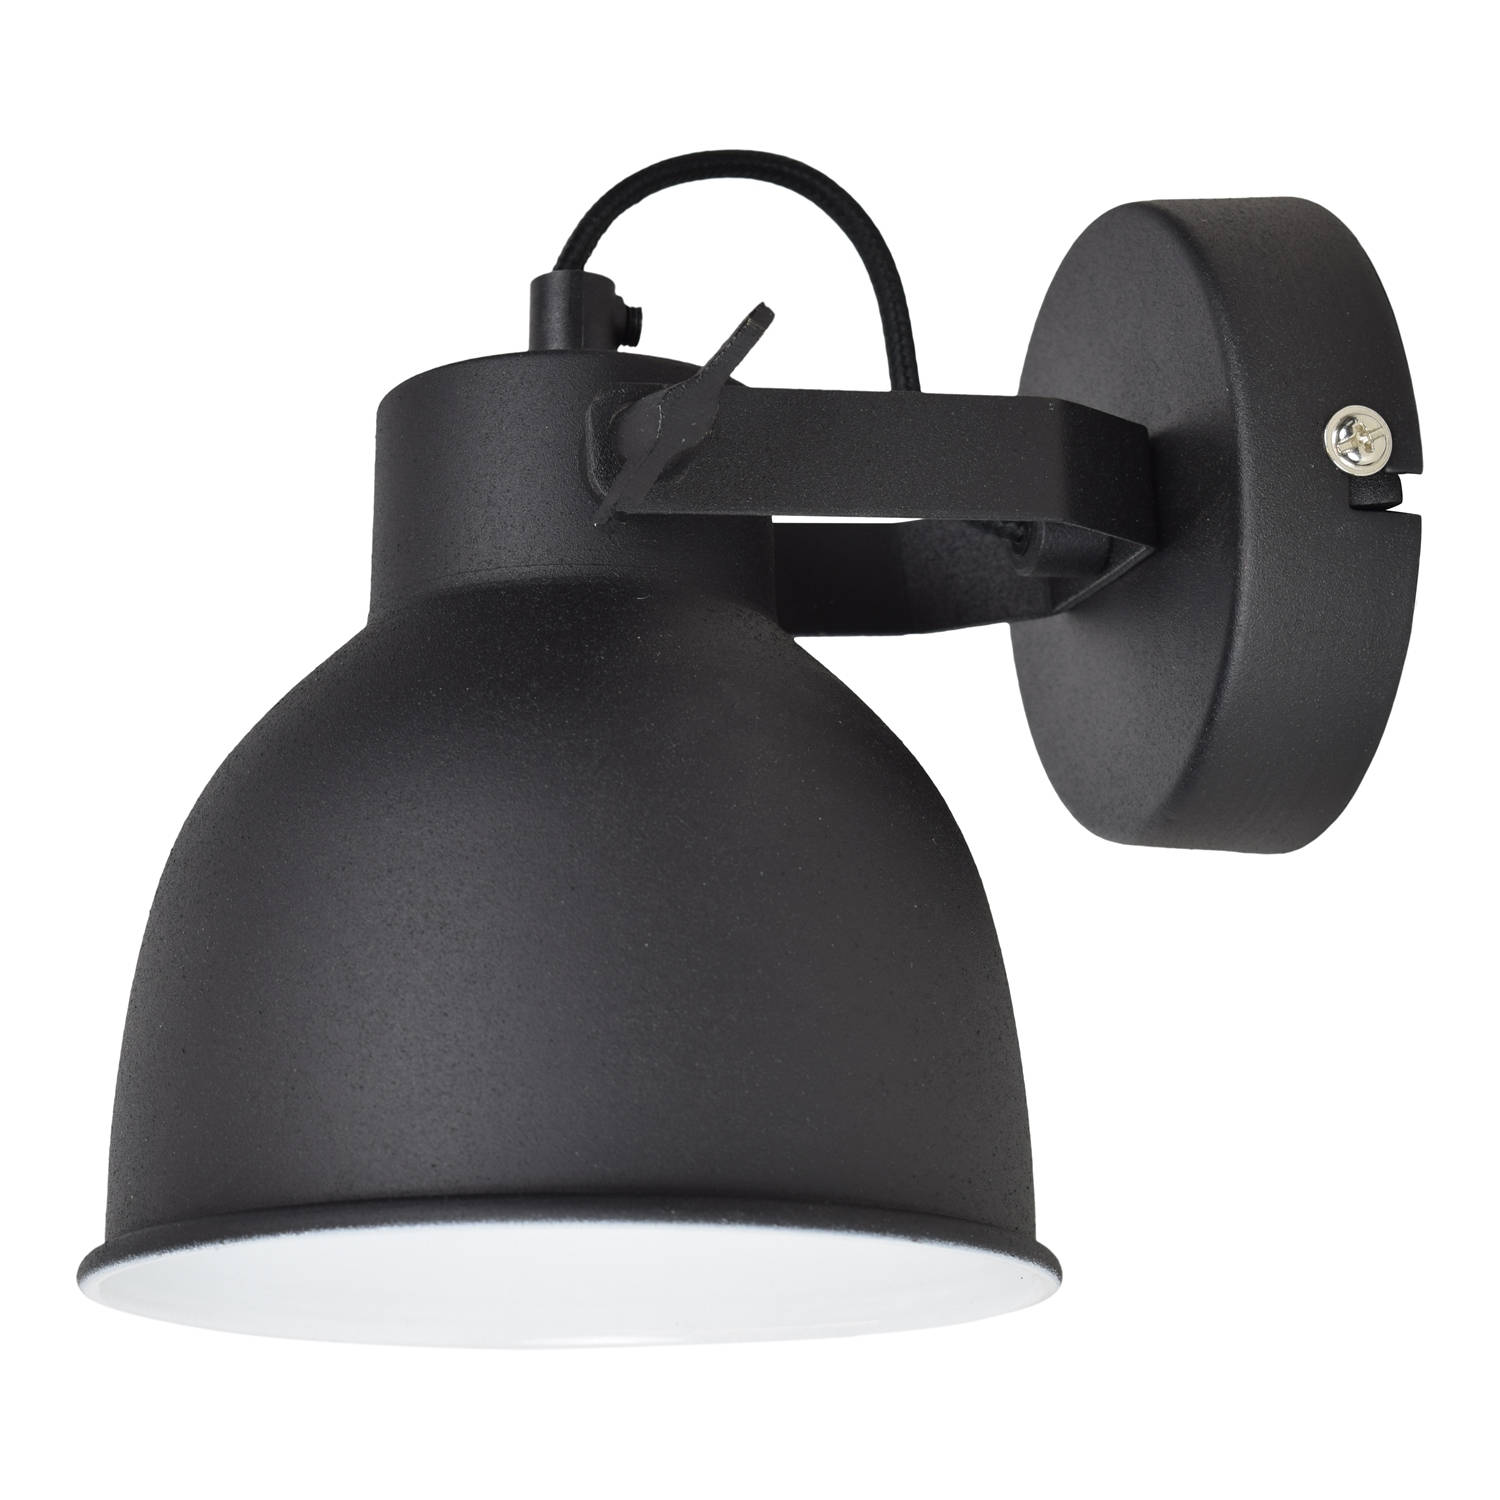 Urban interiors - industrial wandlamp - zwart